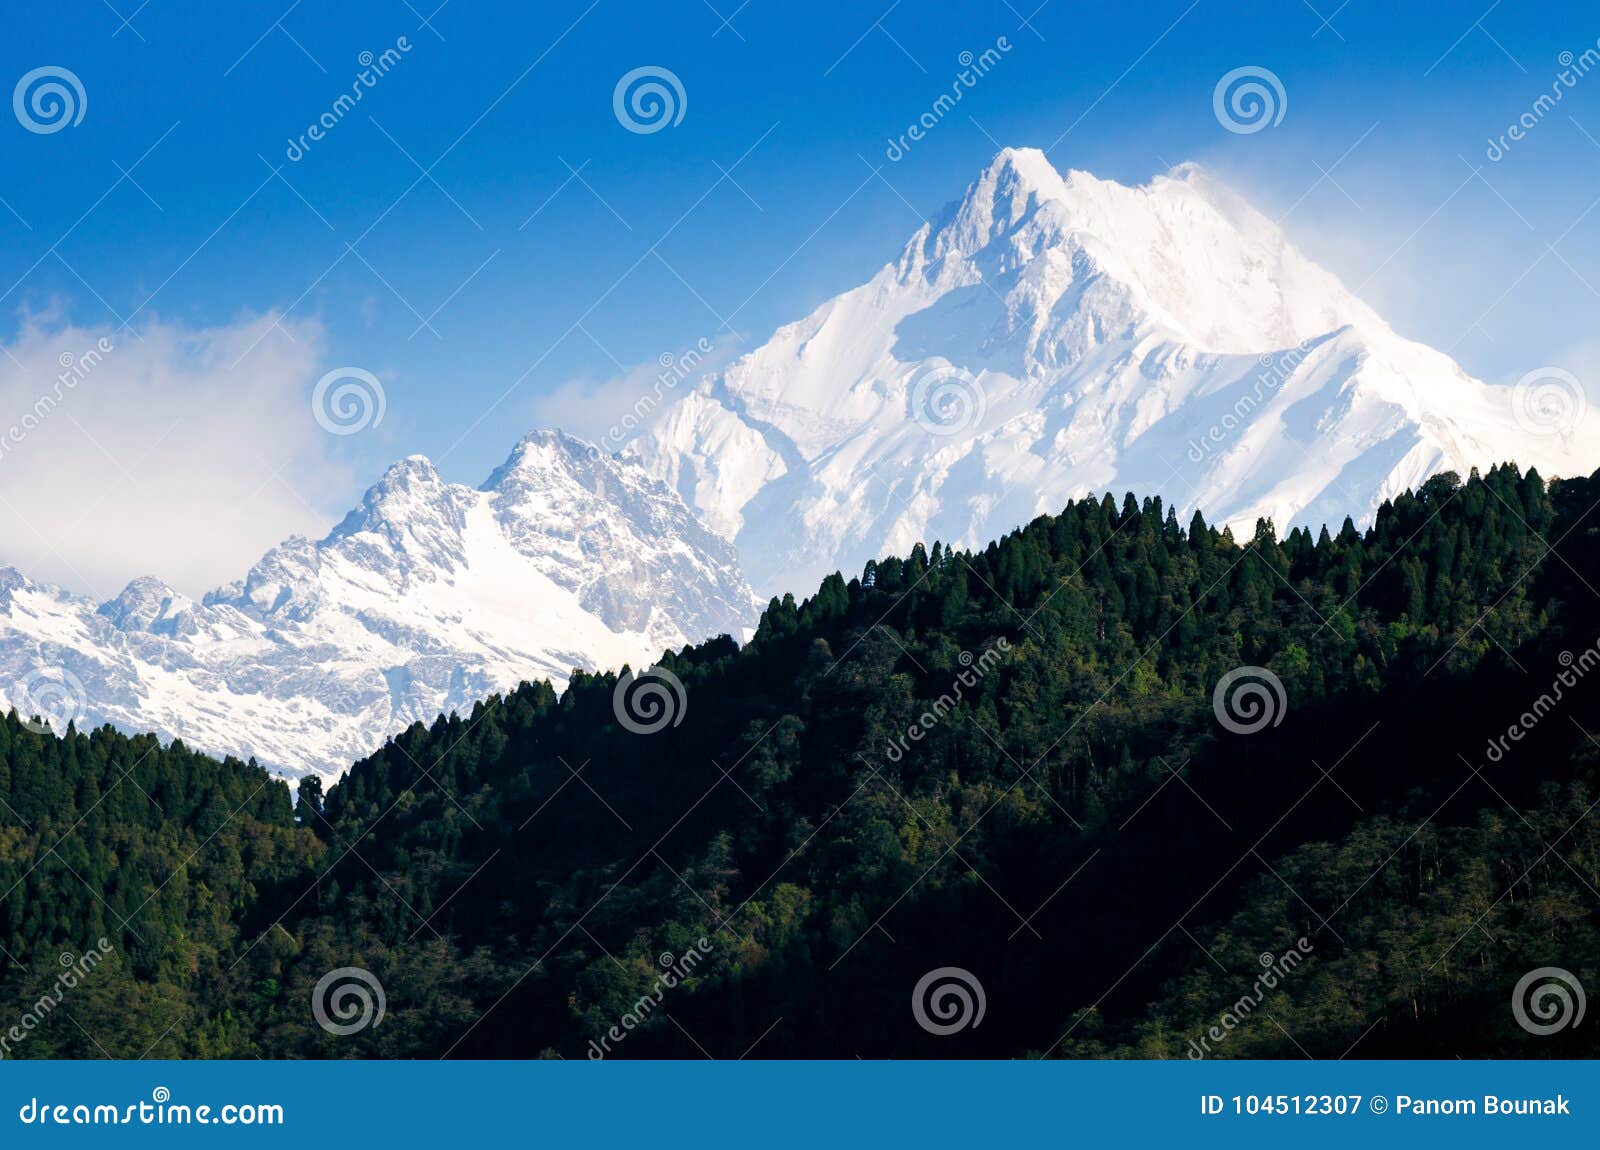 mount kanchenjunga range of the himalayas